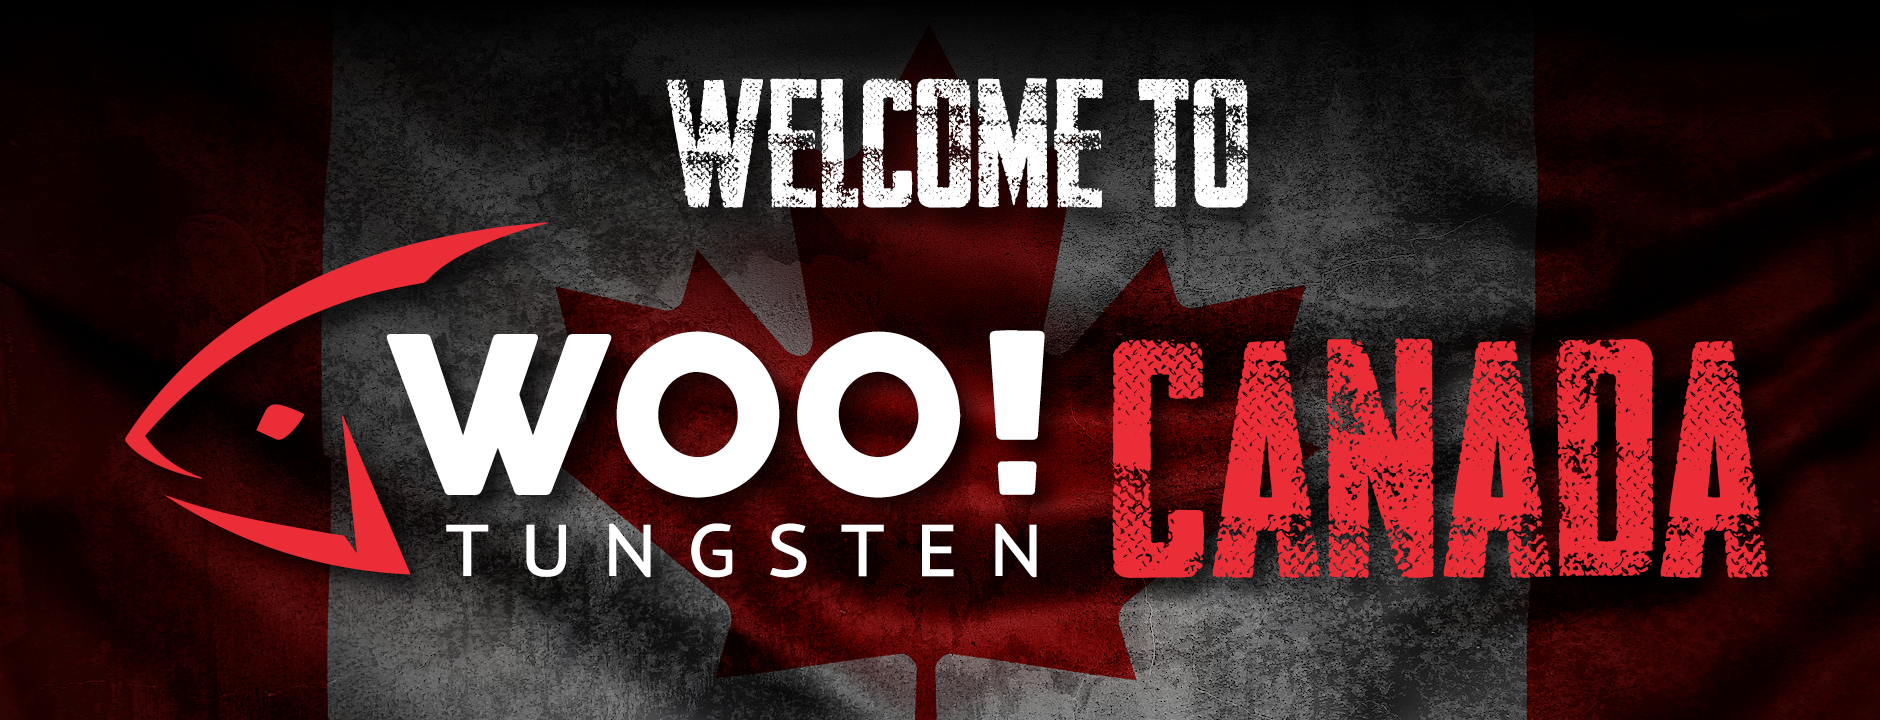 WOO! Tungsten Canada